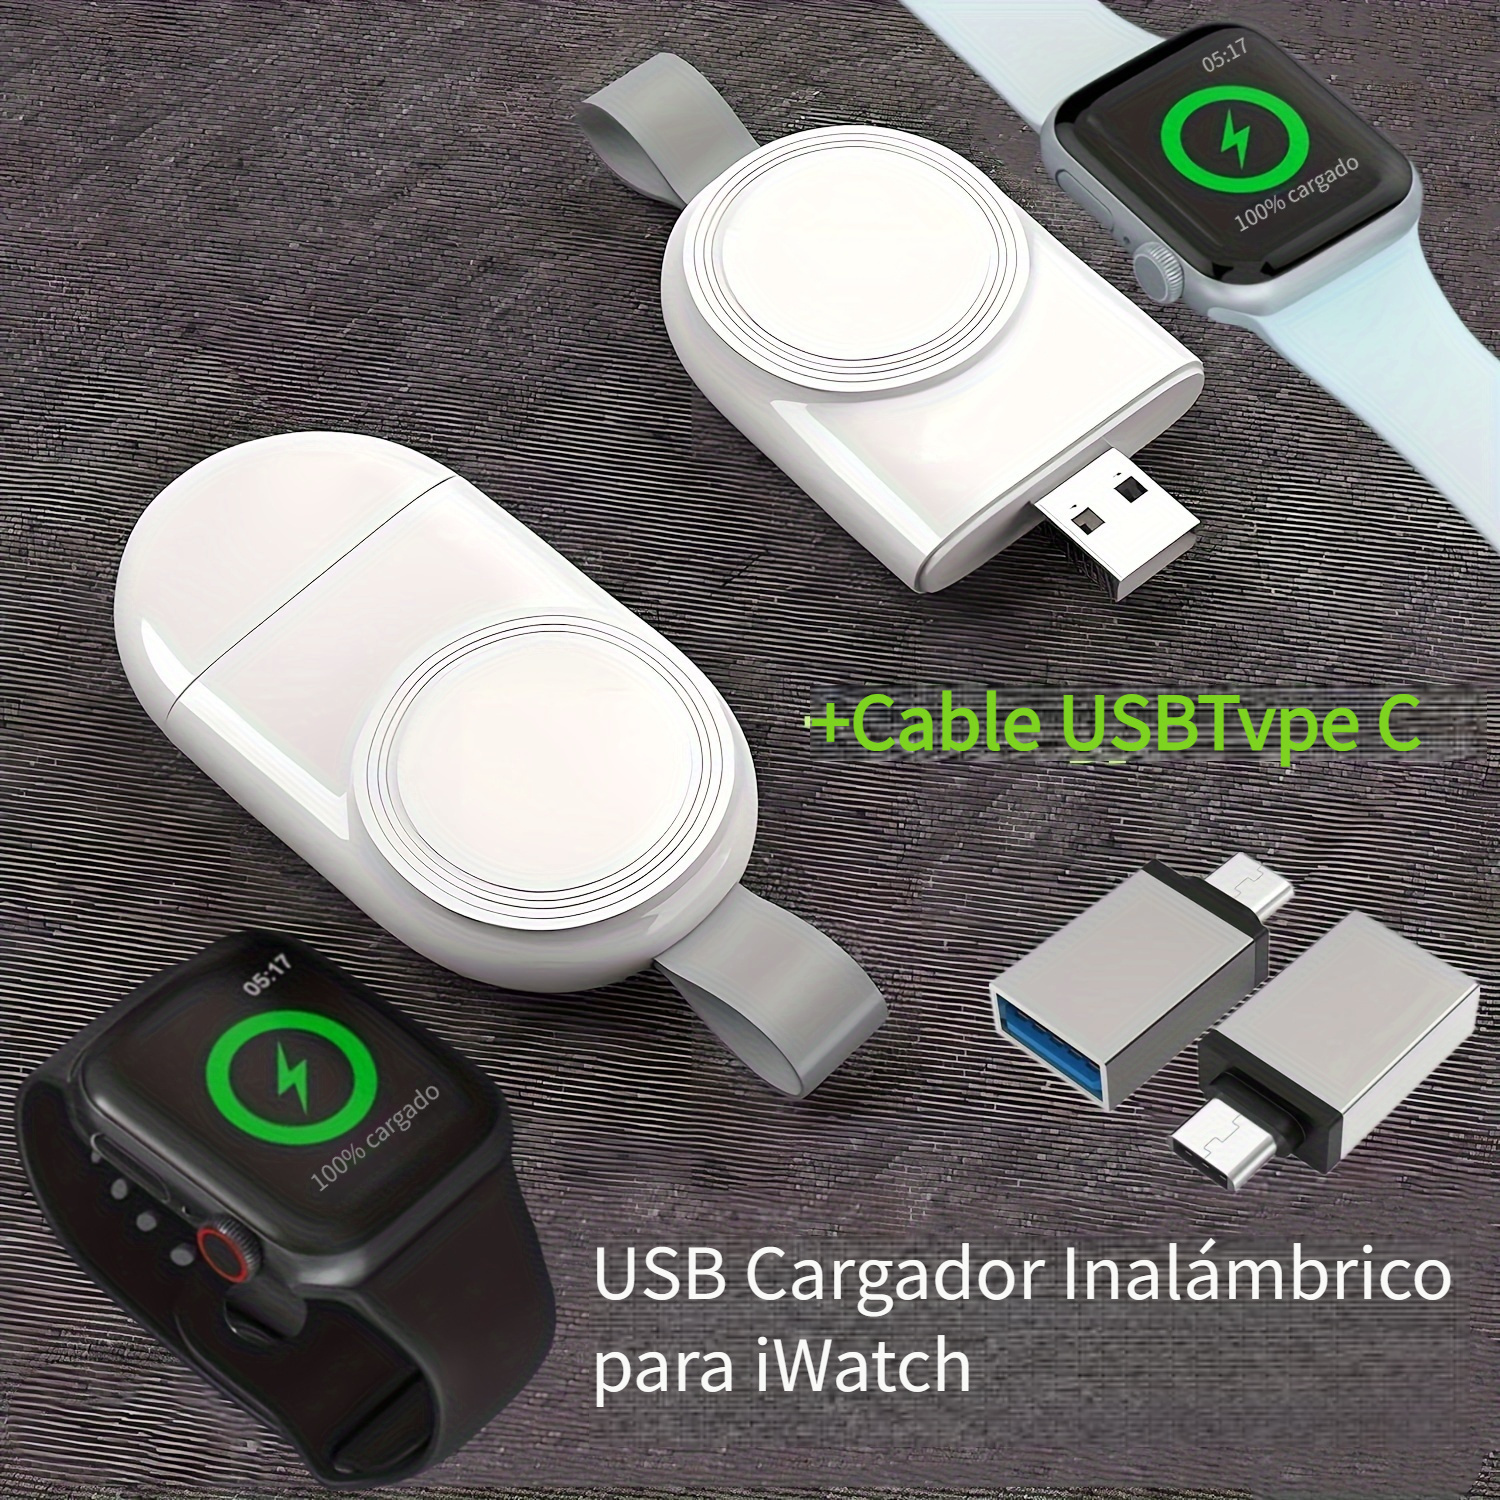 Cable de carga de reloj inteligente para Xiaomi Mi Band 2/3/4/5 Cable de  datos del cargador Universal Accesorios Electrónicos